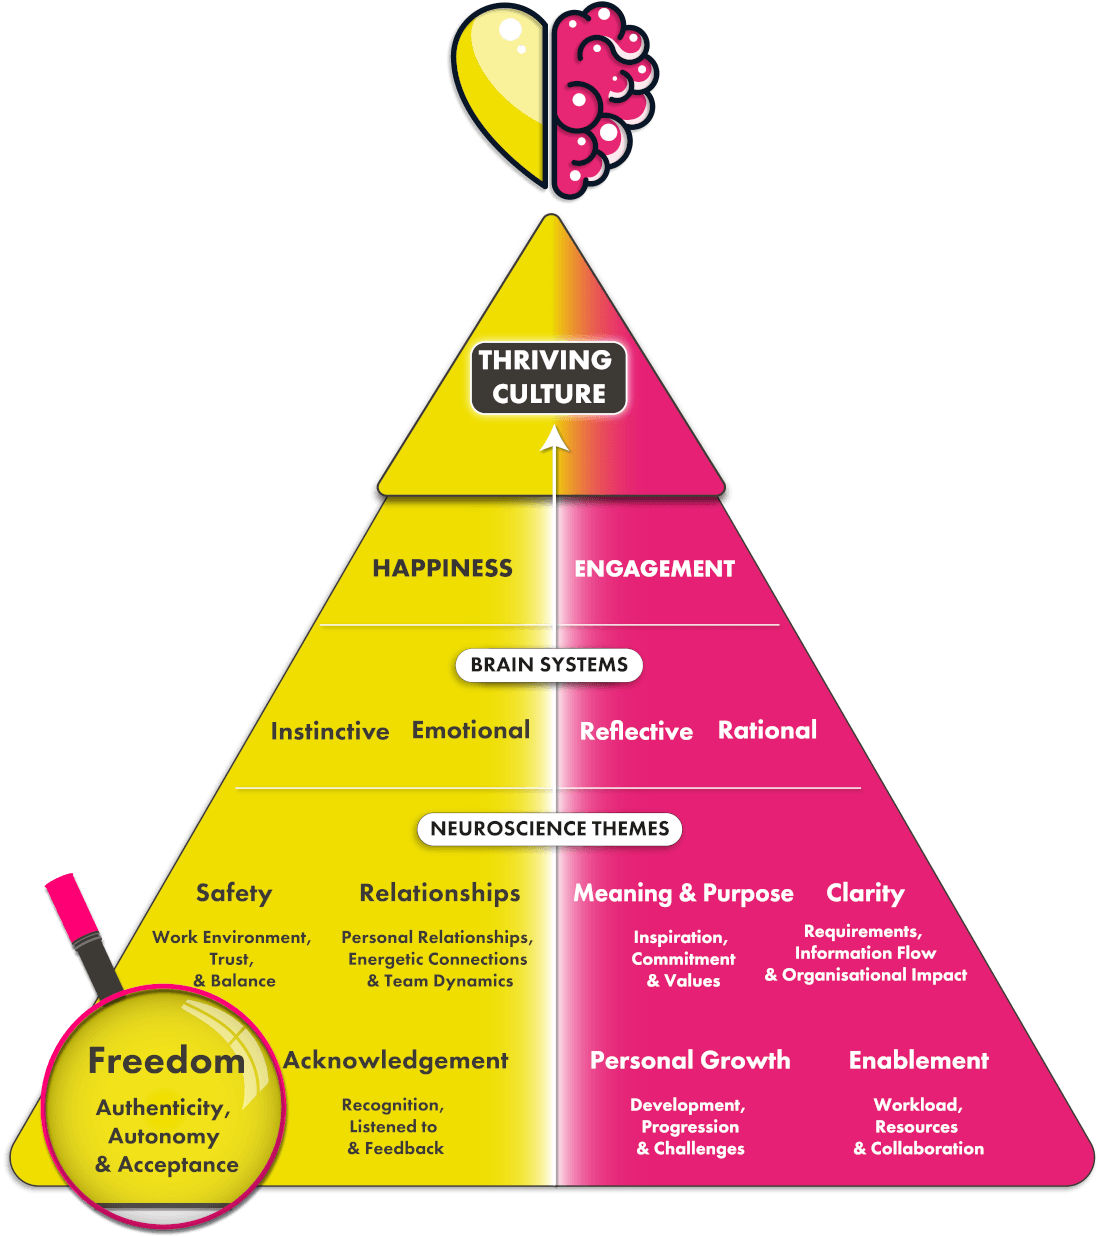 Freedom neuroscience theme on pyramid diagram